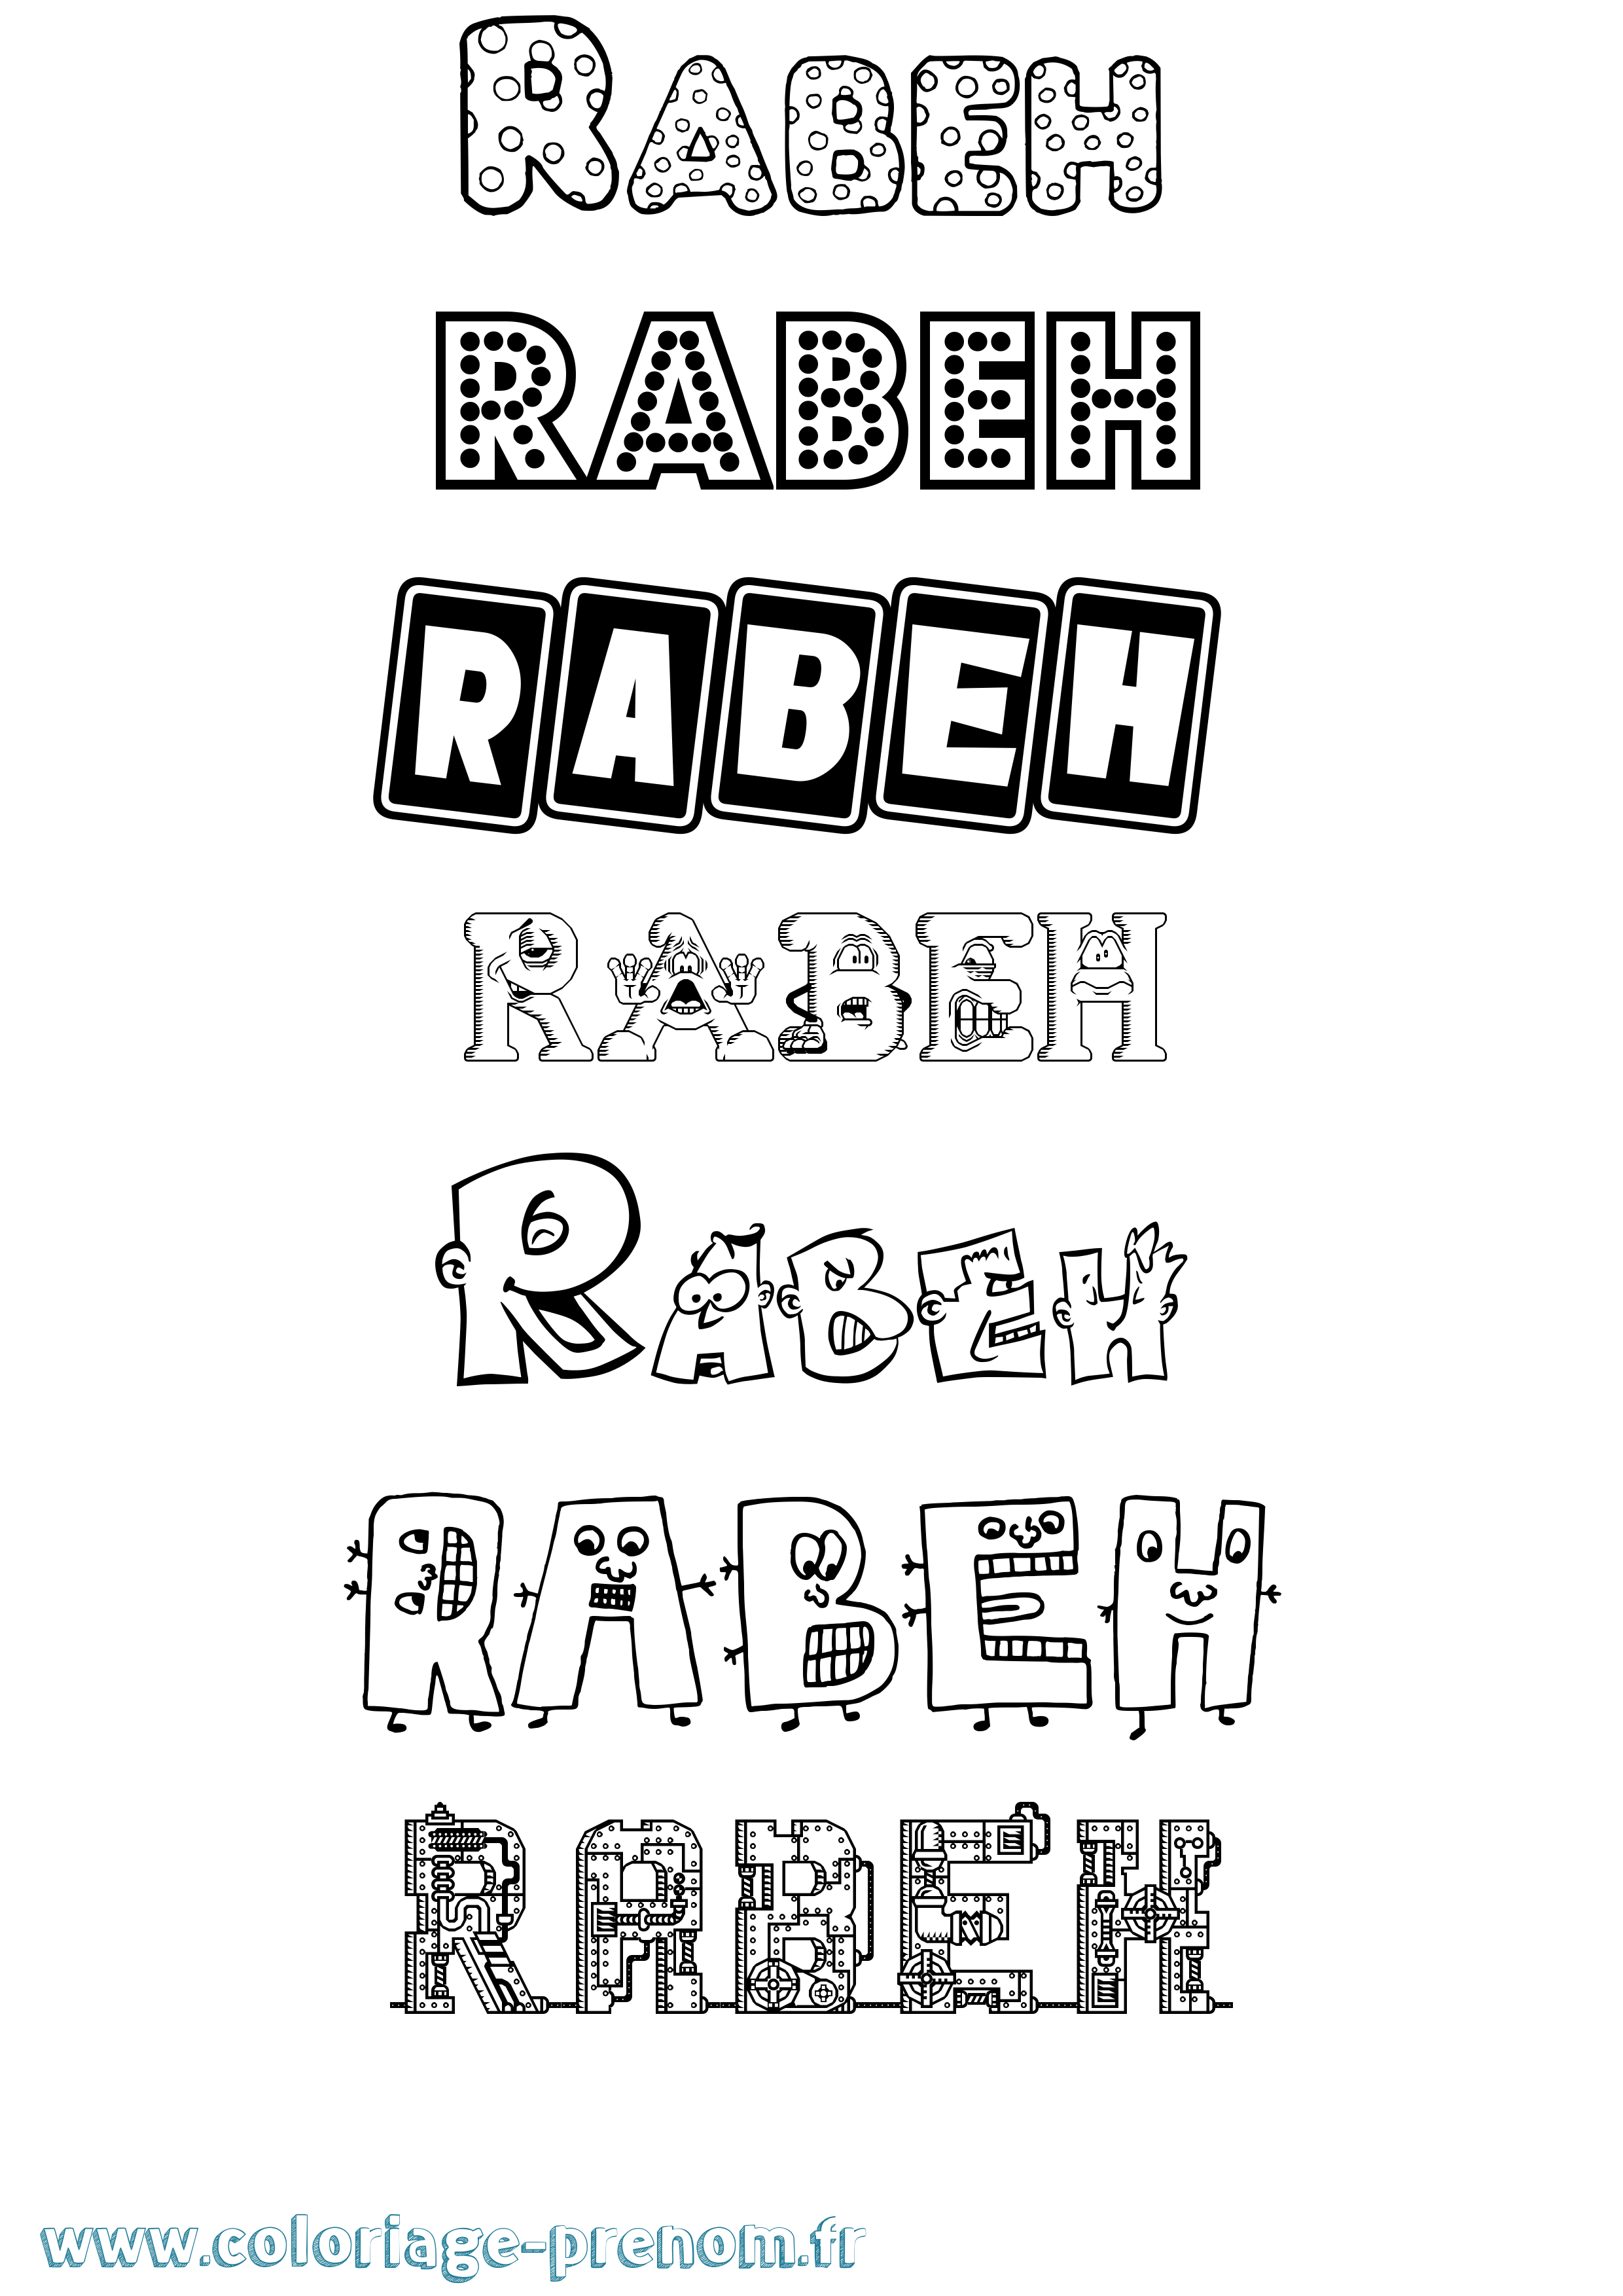 Coloriage prénom Rabeh Fun